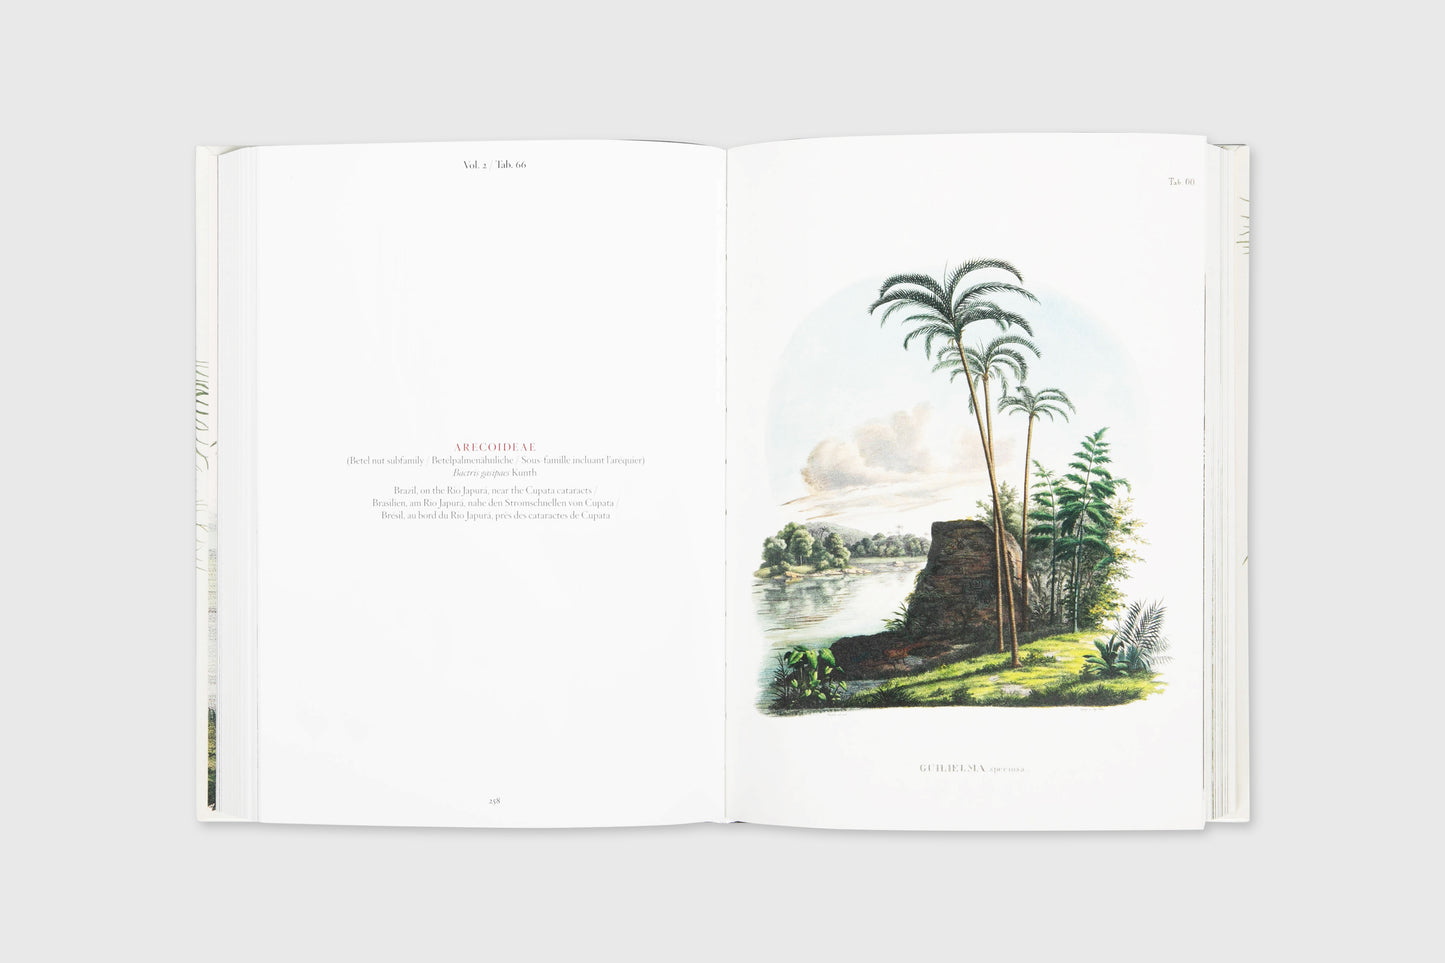 Carl von Martius: The Book of Palms. 40th Ed.